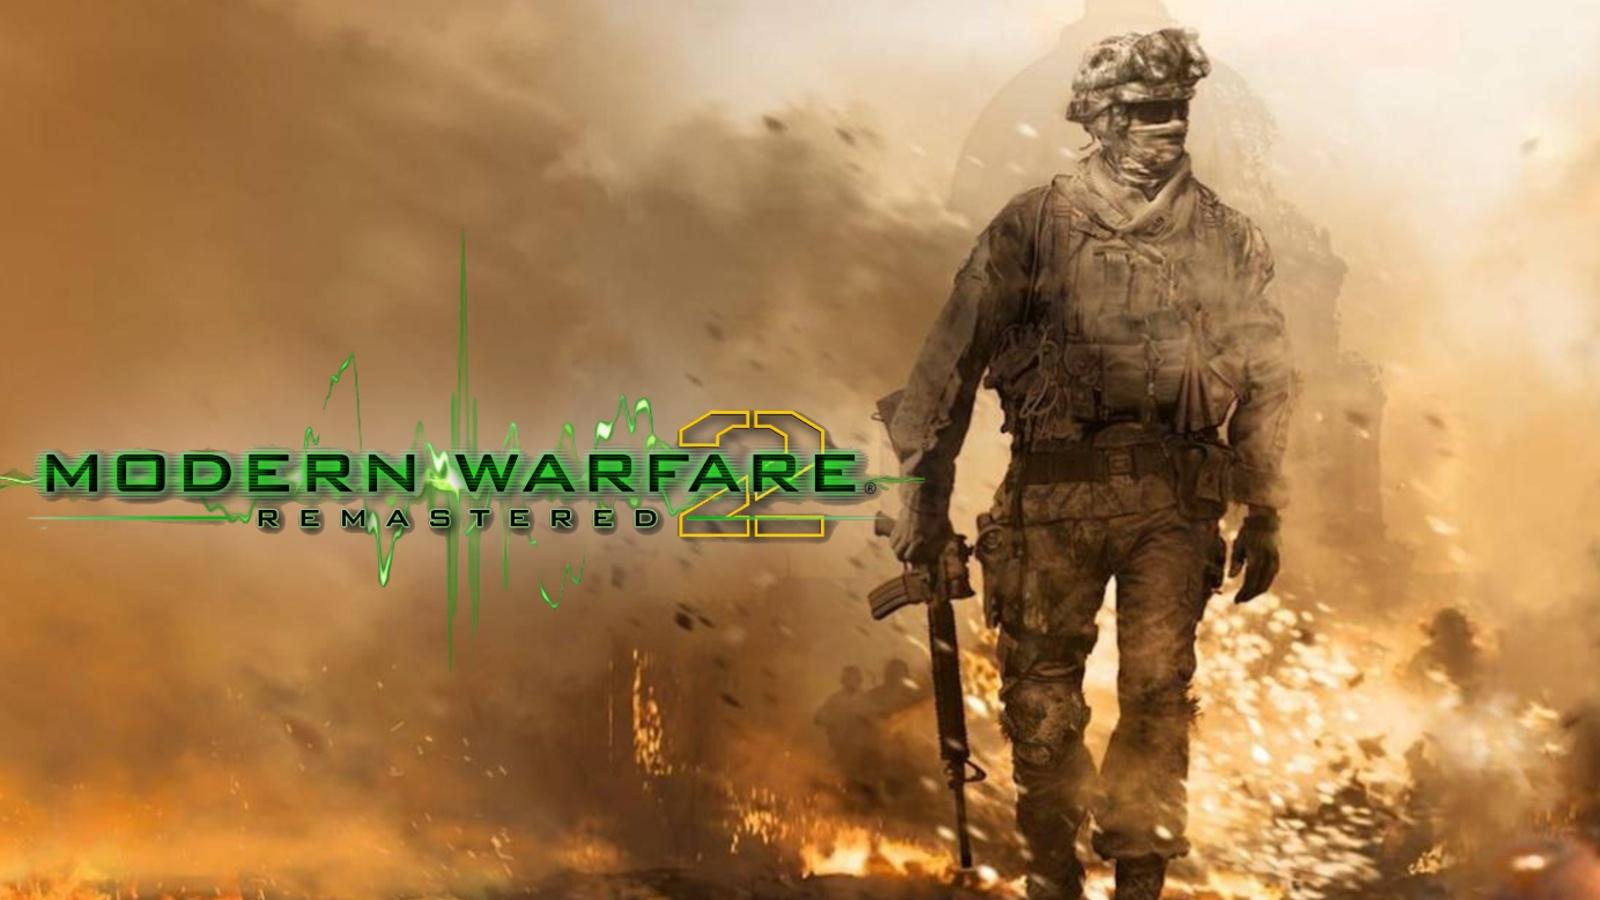 Classic MW2 2009 gun sounds return in Modern Warfare 2 & Warzone 2 Season 3  - Dexerto